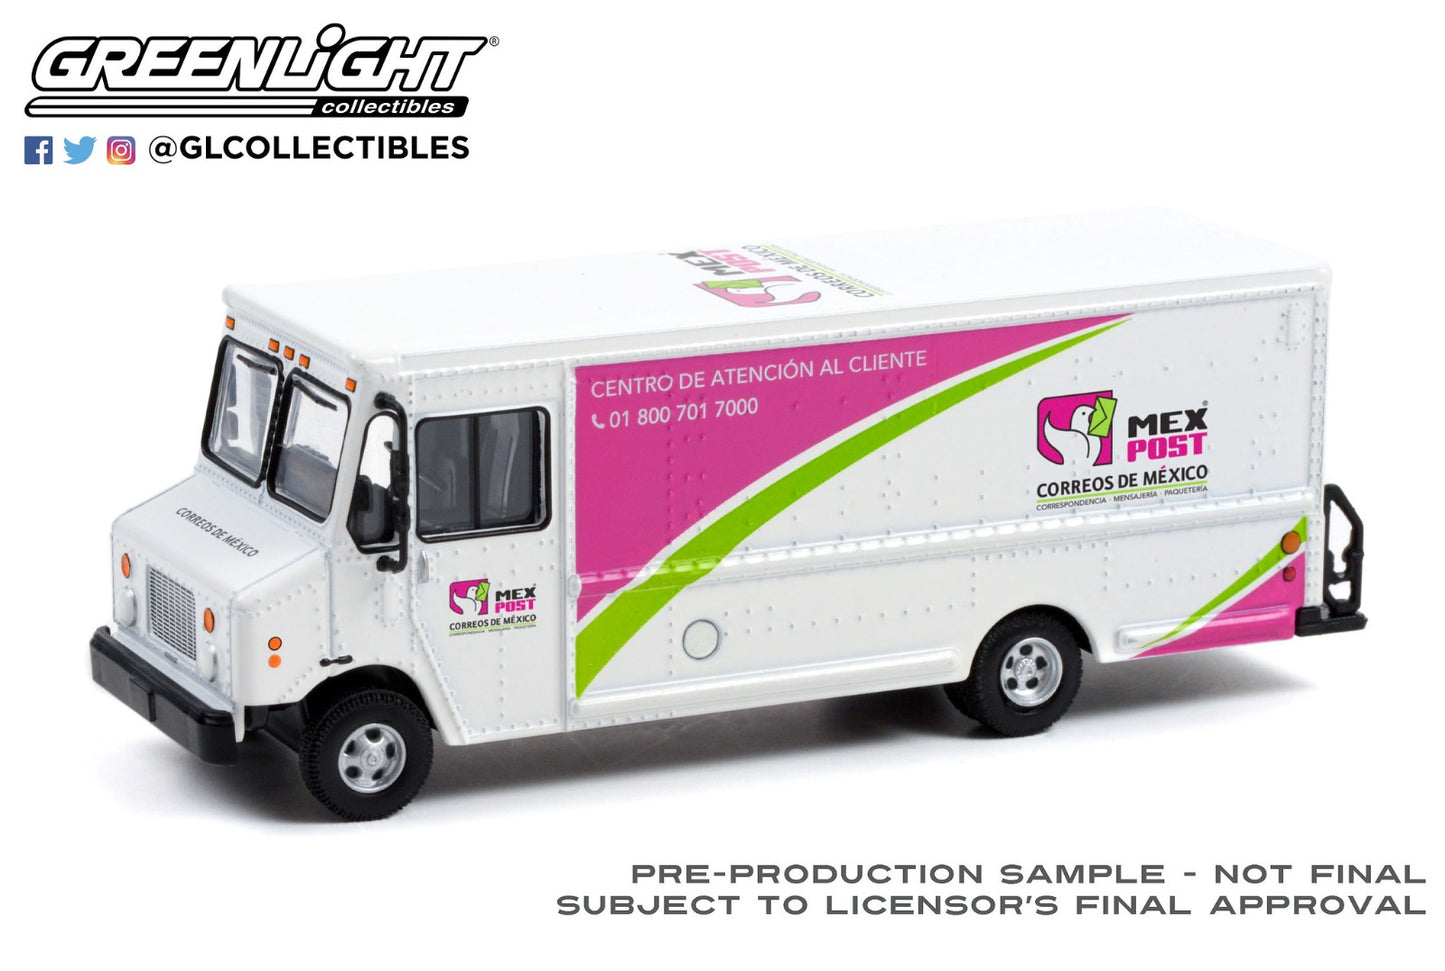 GreenLight 1:64 2020 Mail Delivery Vehicle - Correos de Mexico (Hobby Exclusive) 30300